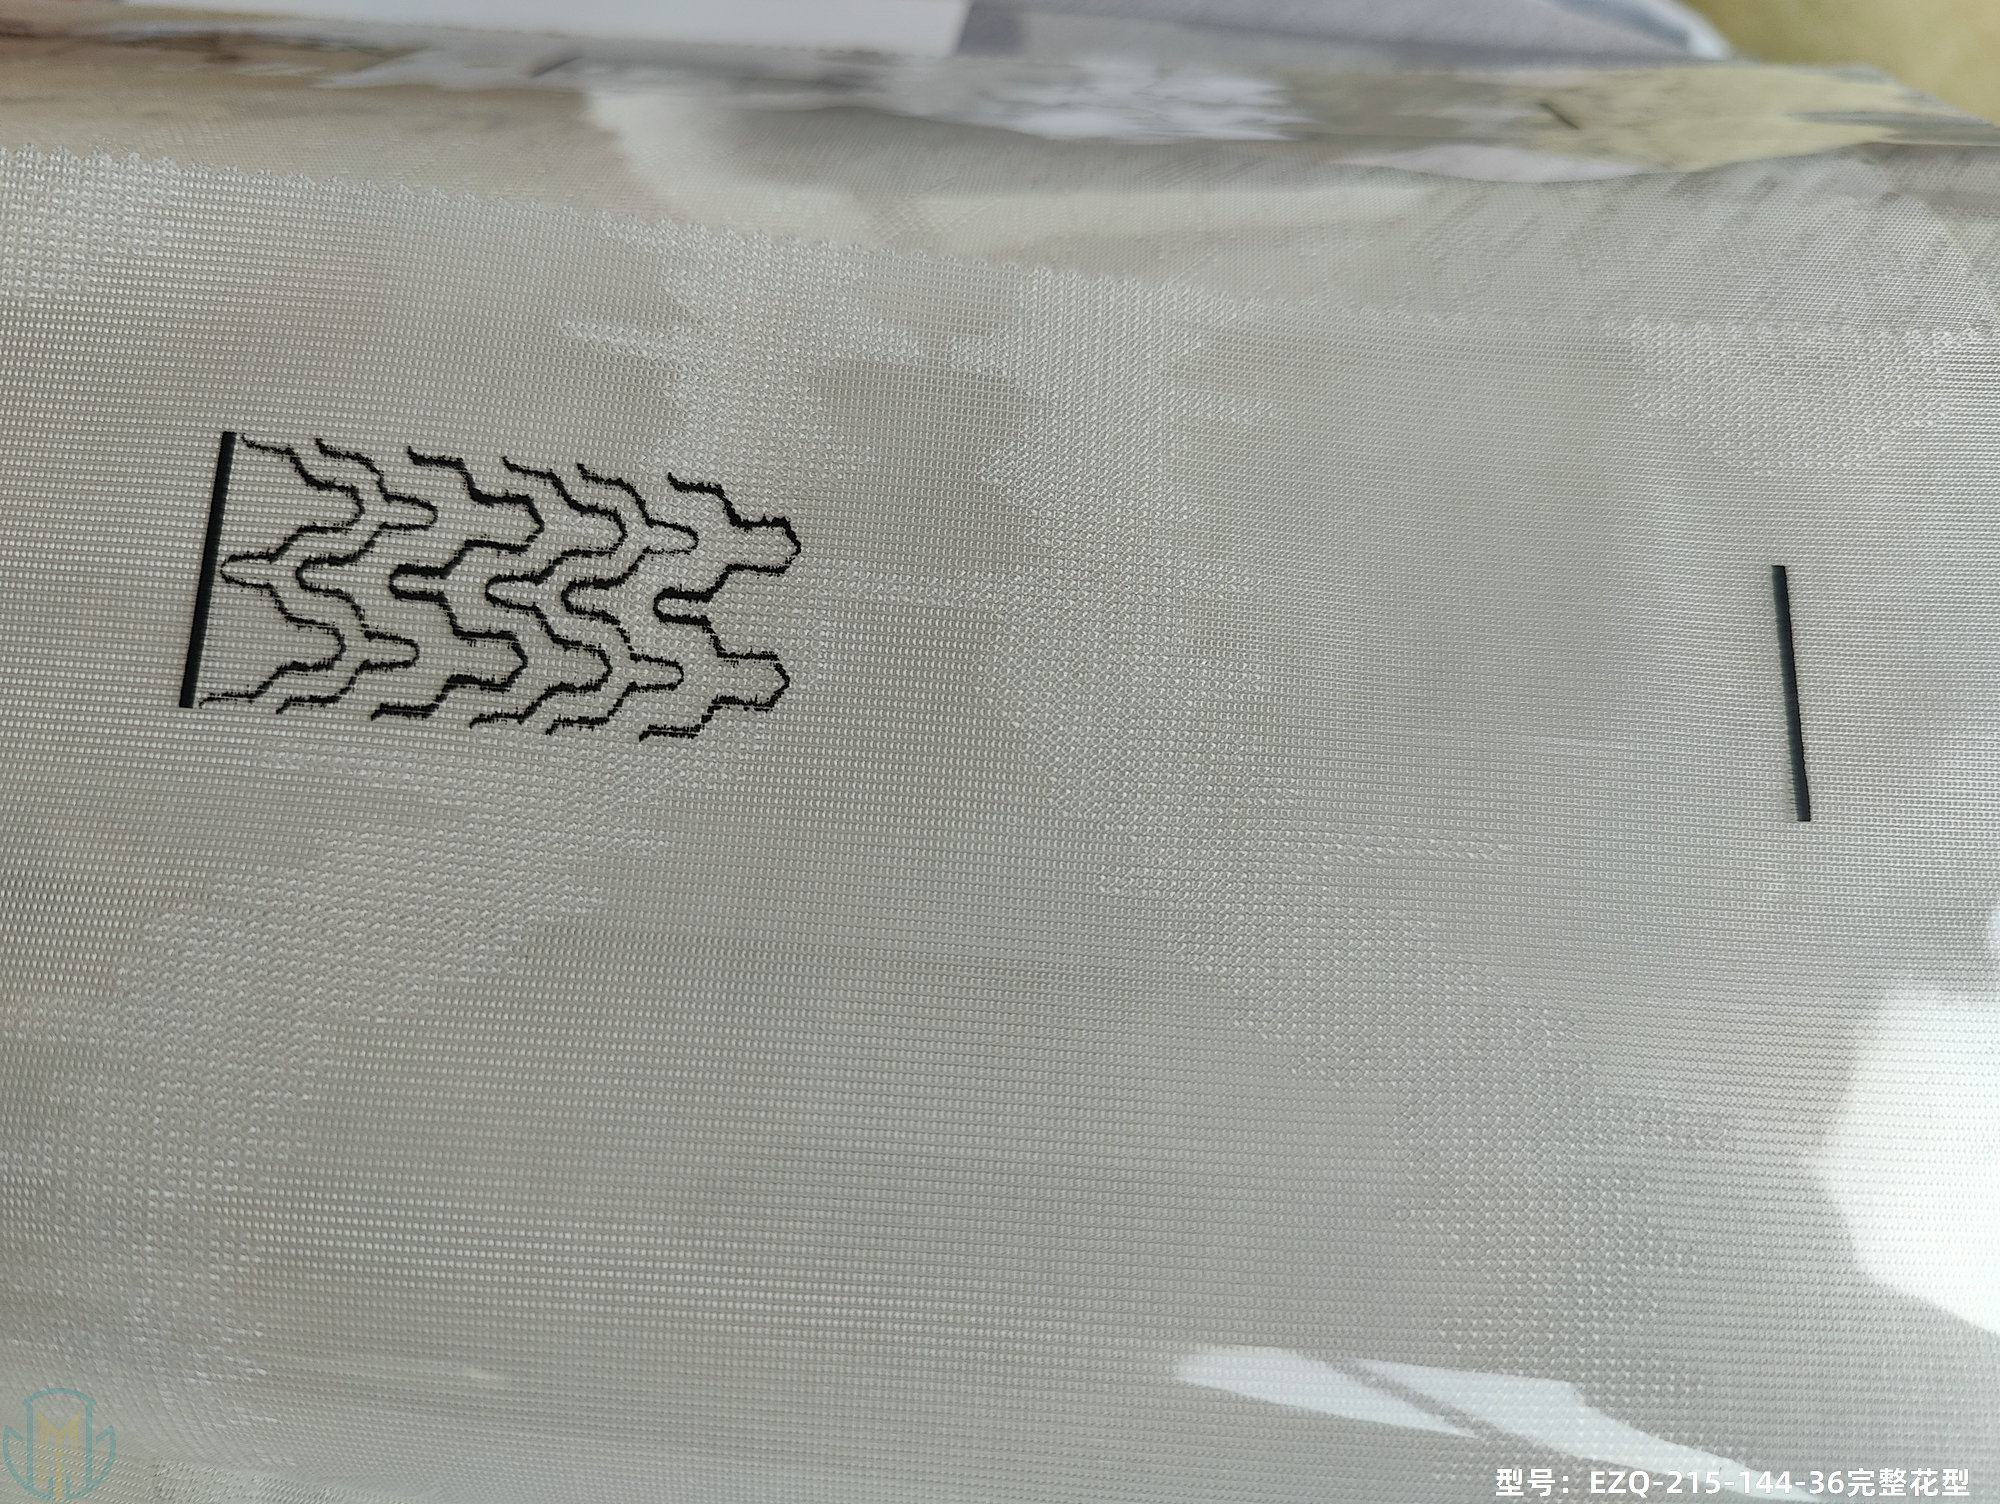 Polish velvet yarn - Warp knitting process transparent window screen - China Textile City - Keqiao curtain wholesale manufacturer